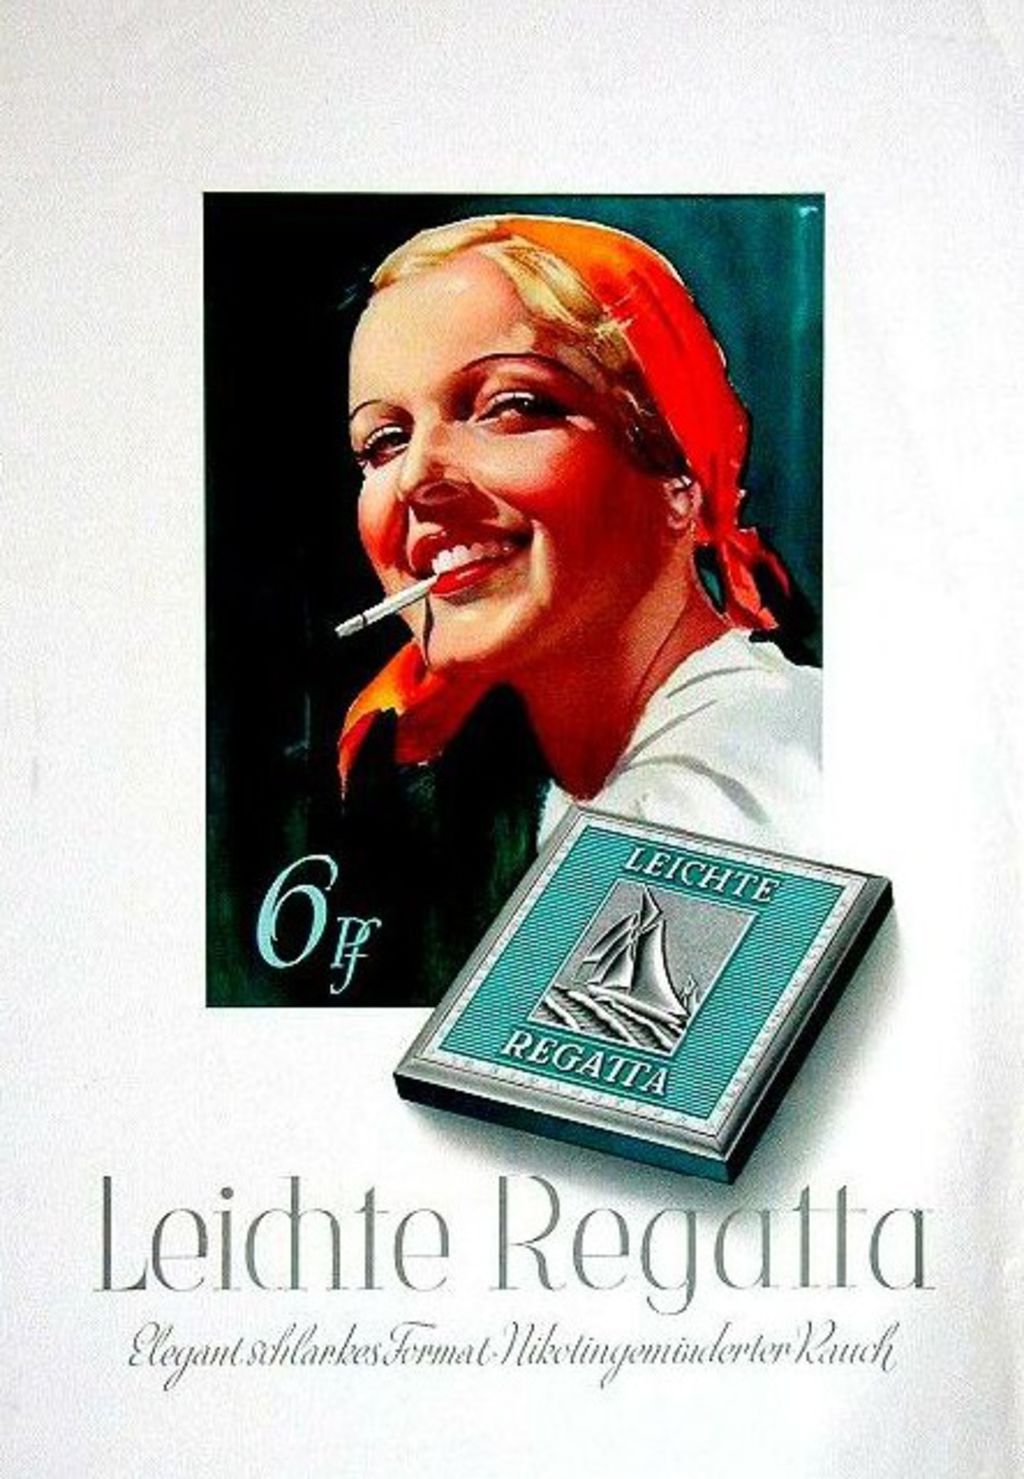 Exponat: Plakat: Zigarettenwerbung, um 1930